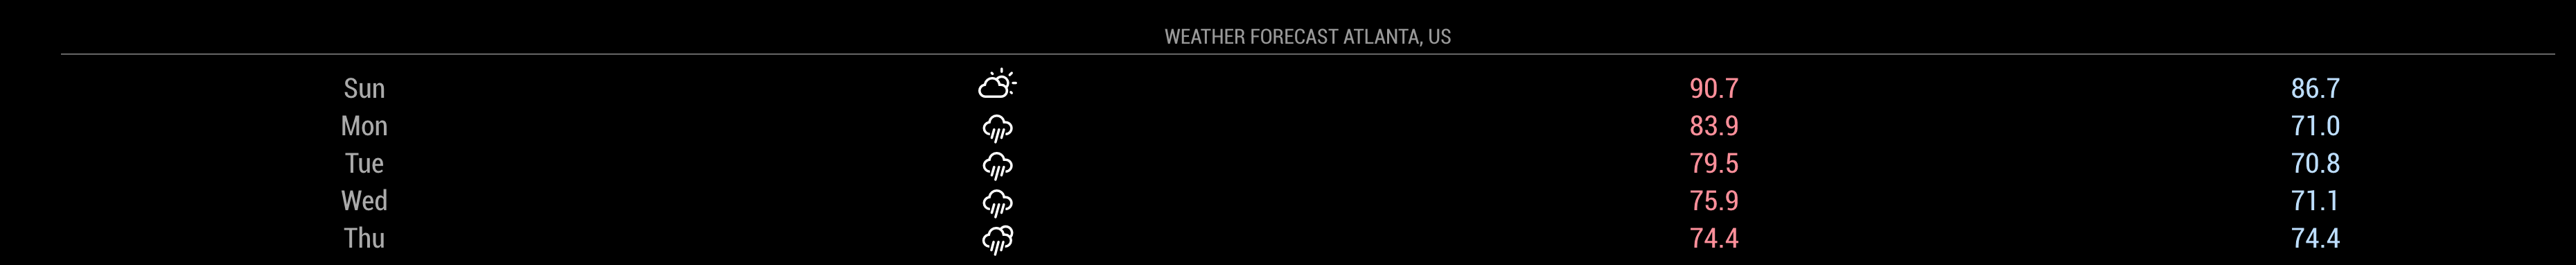 forecast_screenshot.png